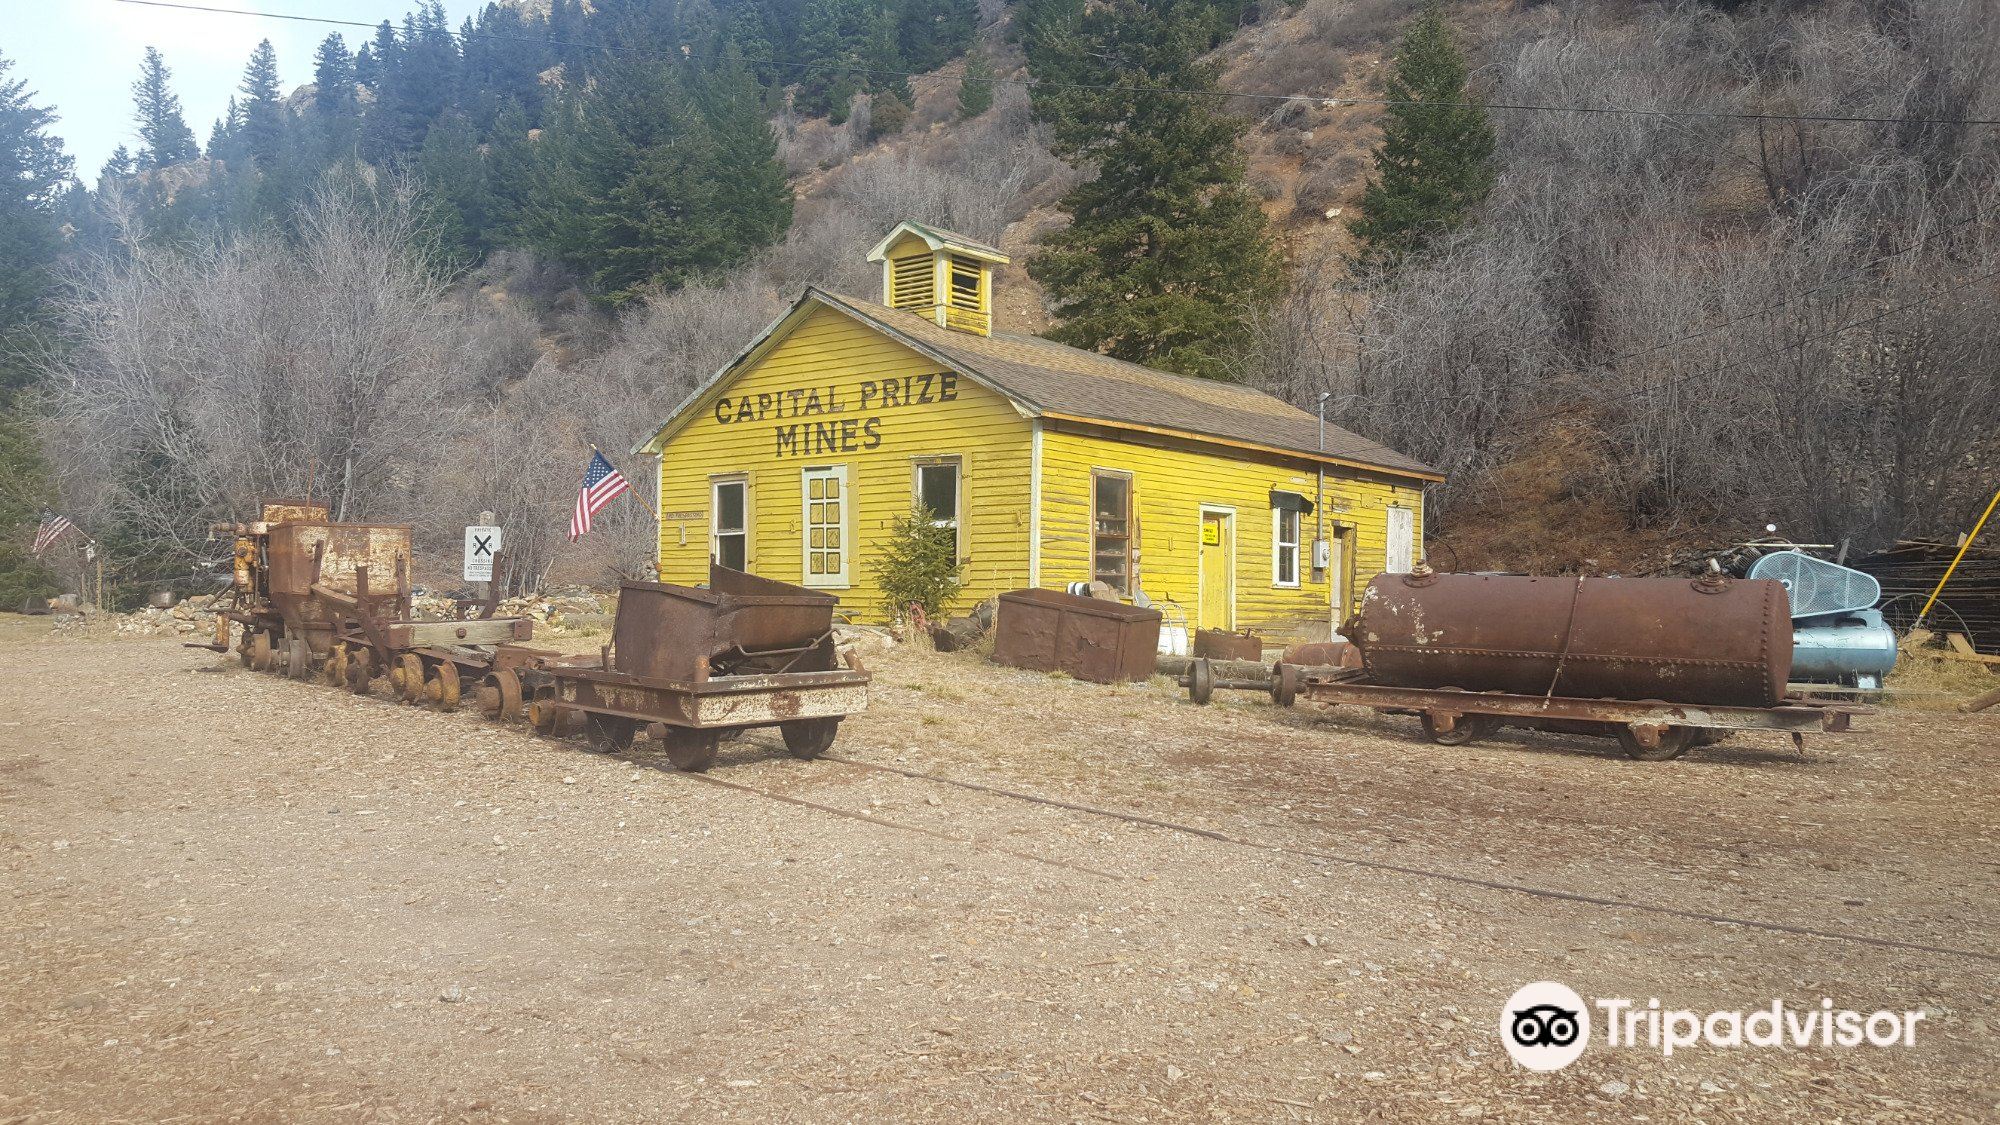 Mine Tours & Gold Panning - Georgetown Loop Railroad